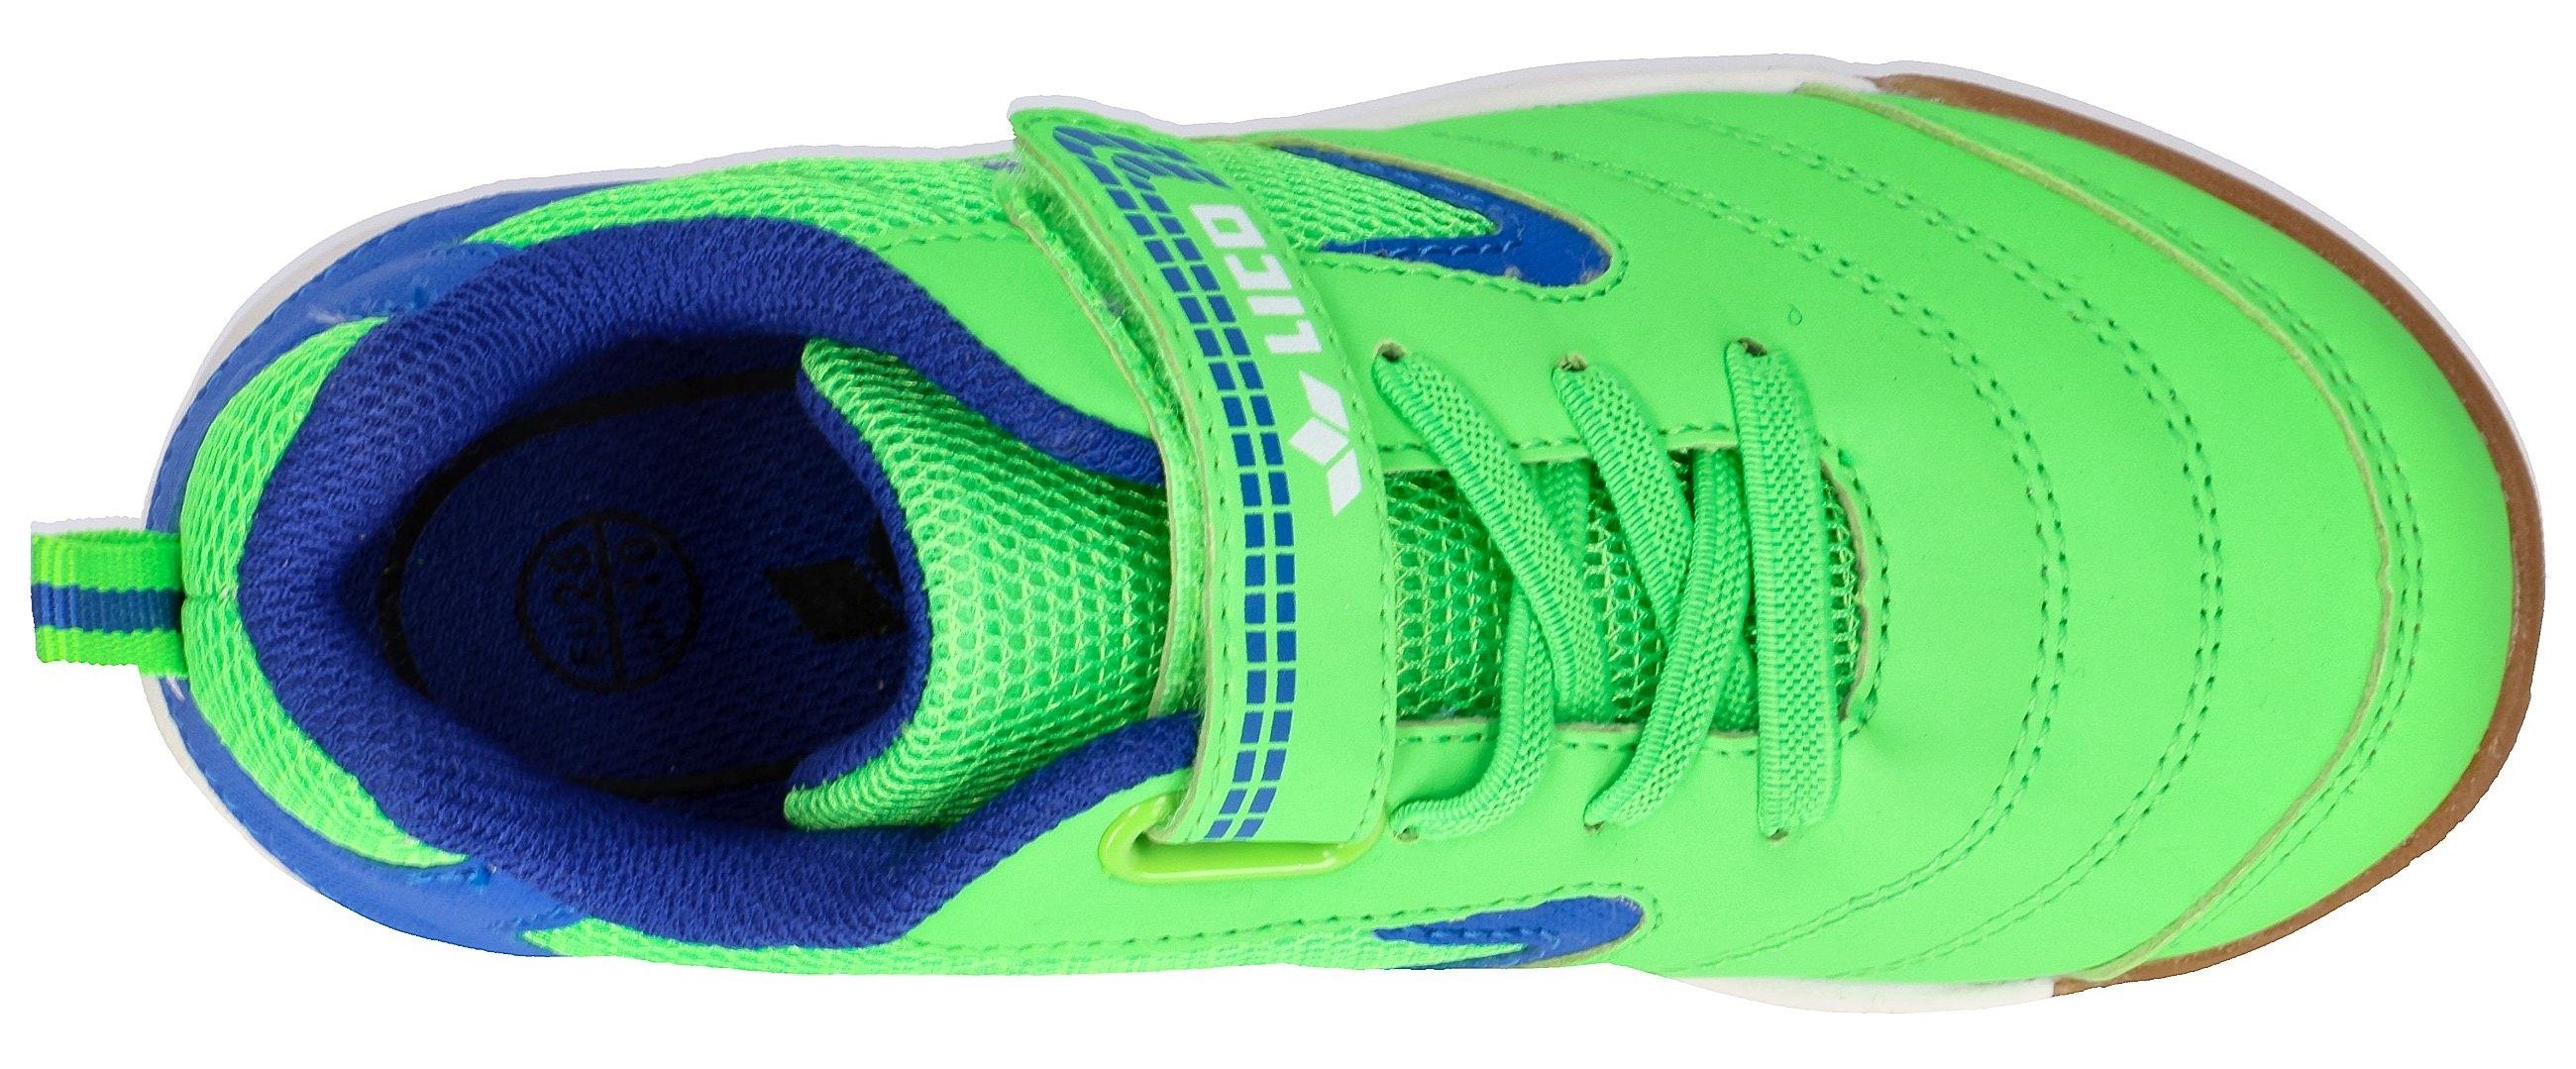 Lico Ari VS heller grün-blau Laufsohle WMS mit Sneaker